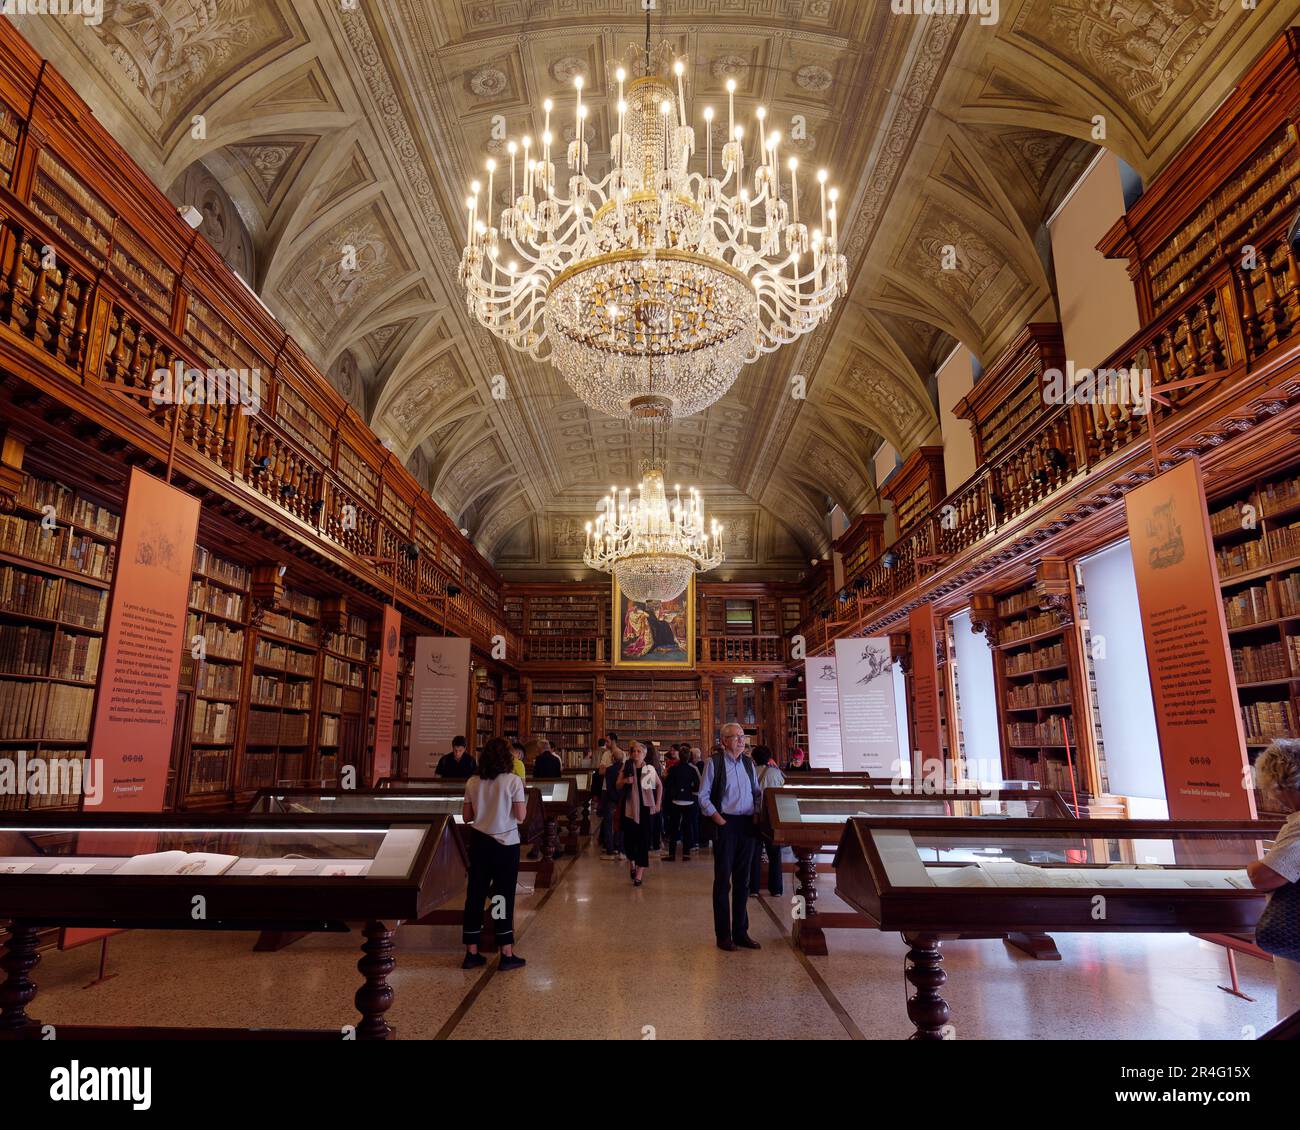 Library inside Pinacoteca di Brera (Art Gallery of Brera), district of Brera, City of Milan, Lombardy Region, Italy Stock Photo